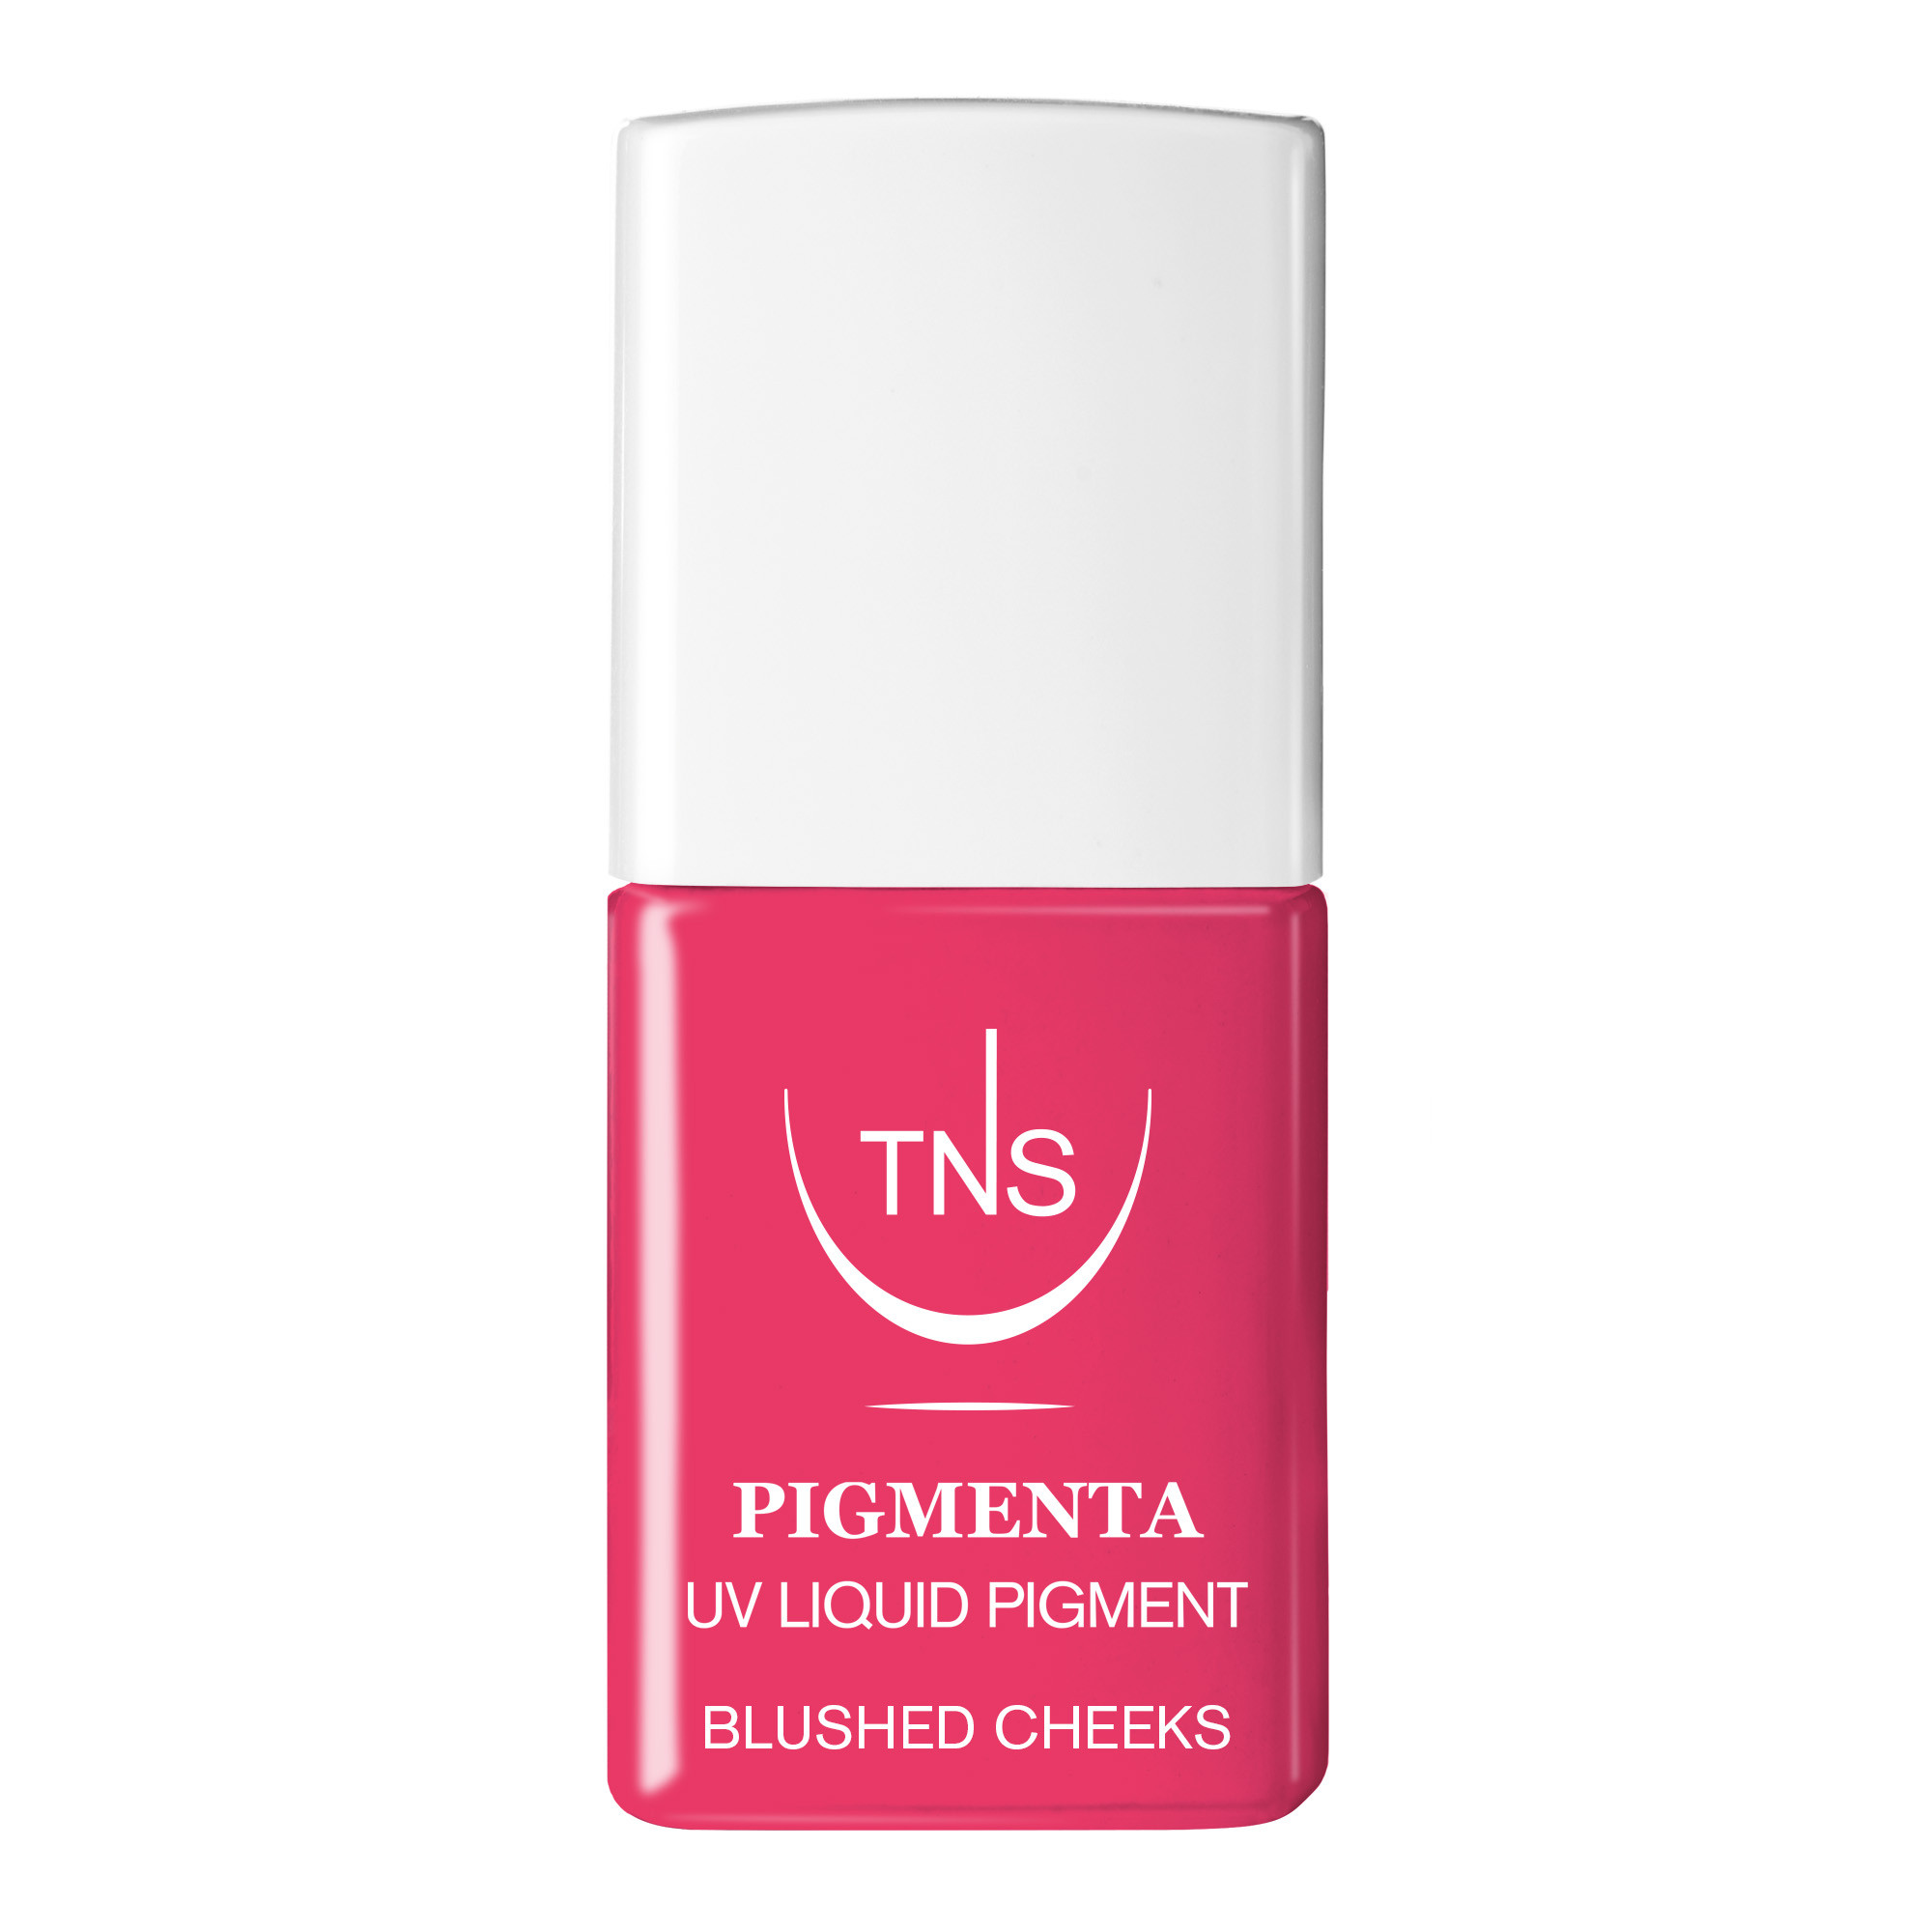 Pigmento Liquido UV Blushed Cheeks rosa amarena 10 ml Pigmenta TNS